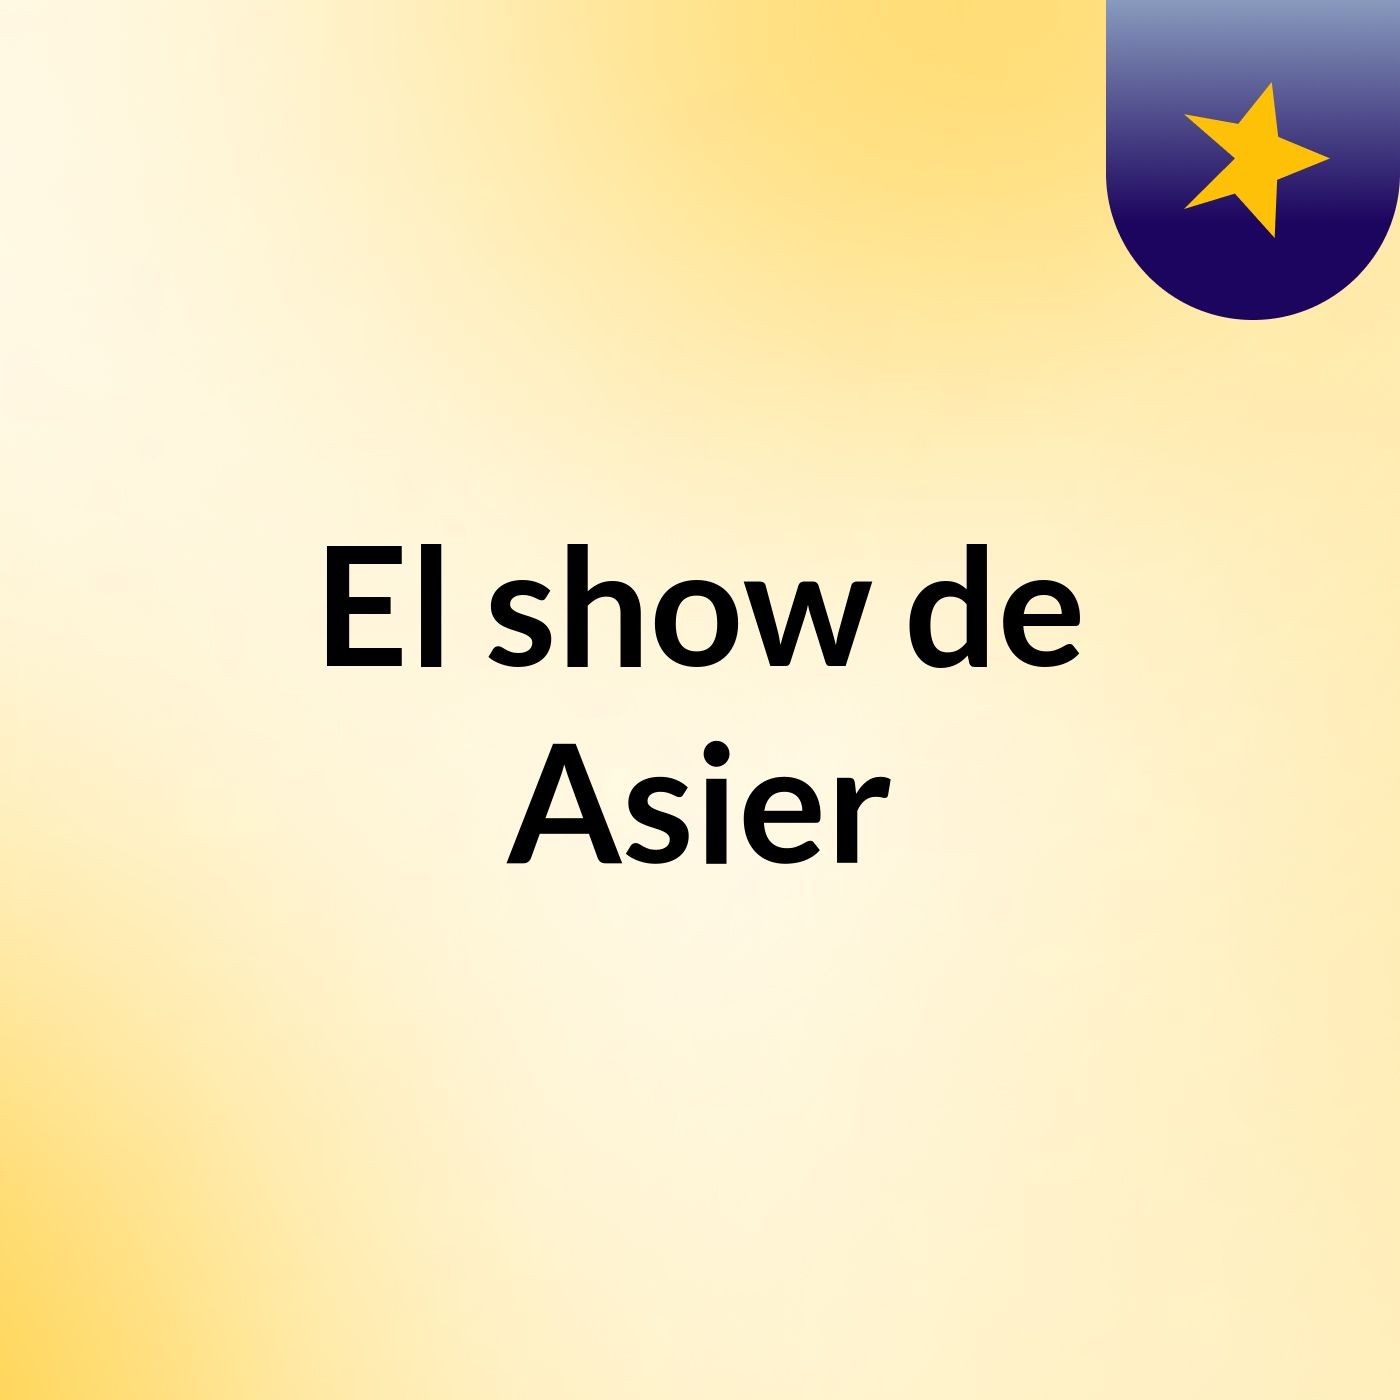 El show de Asier